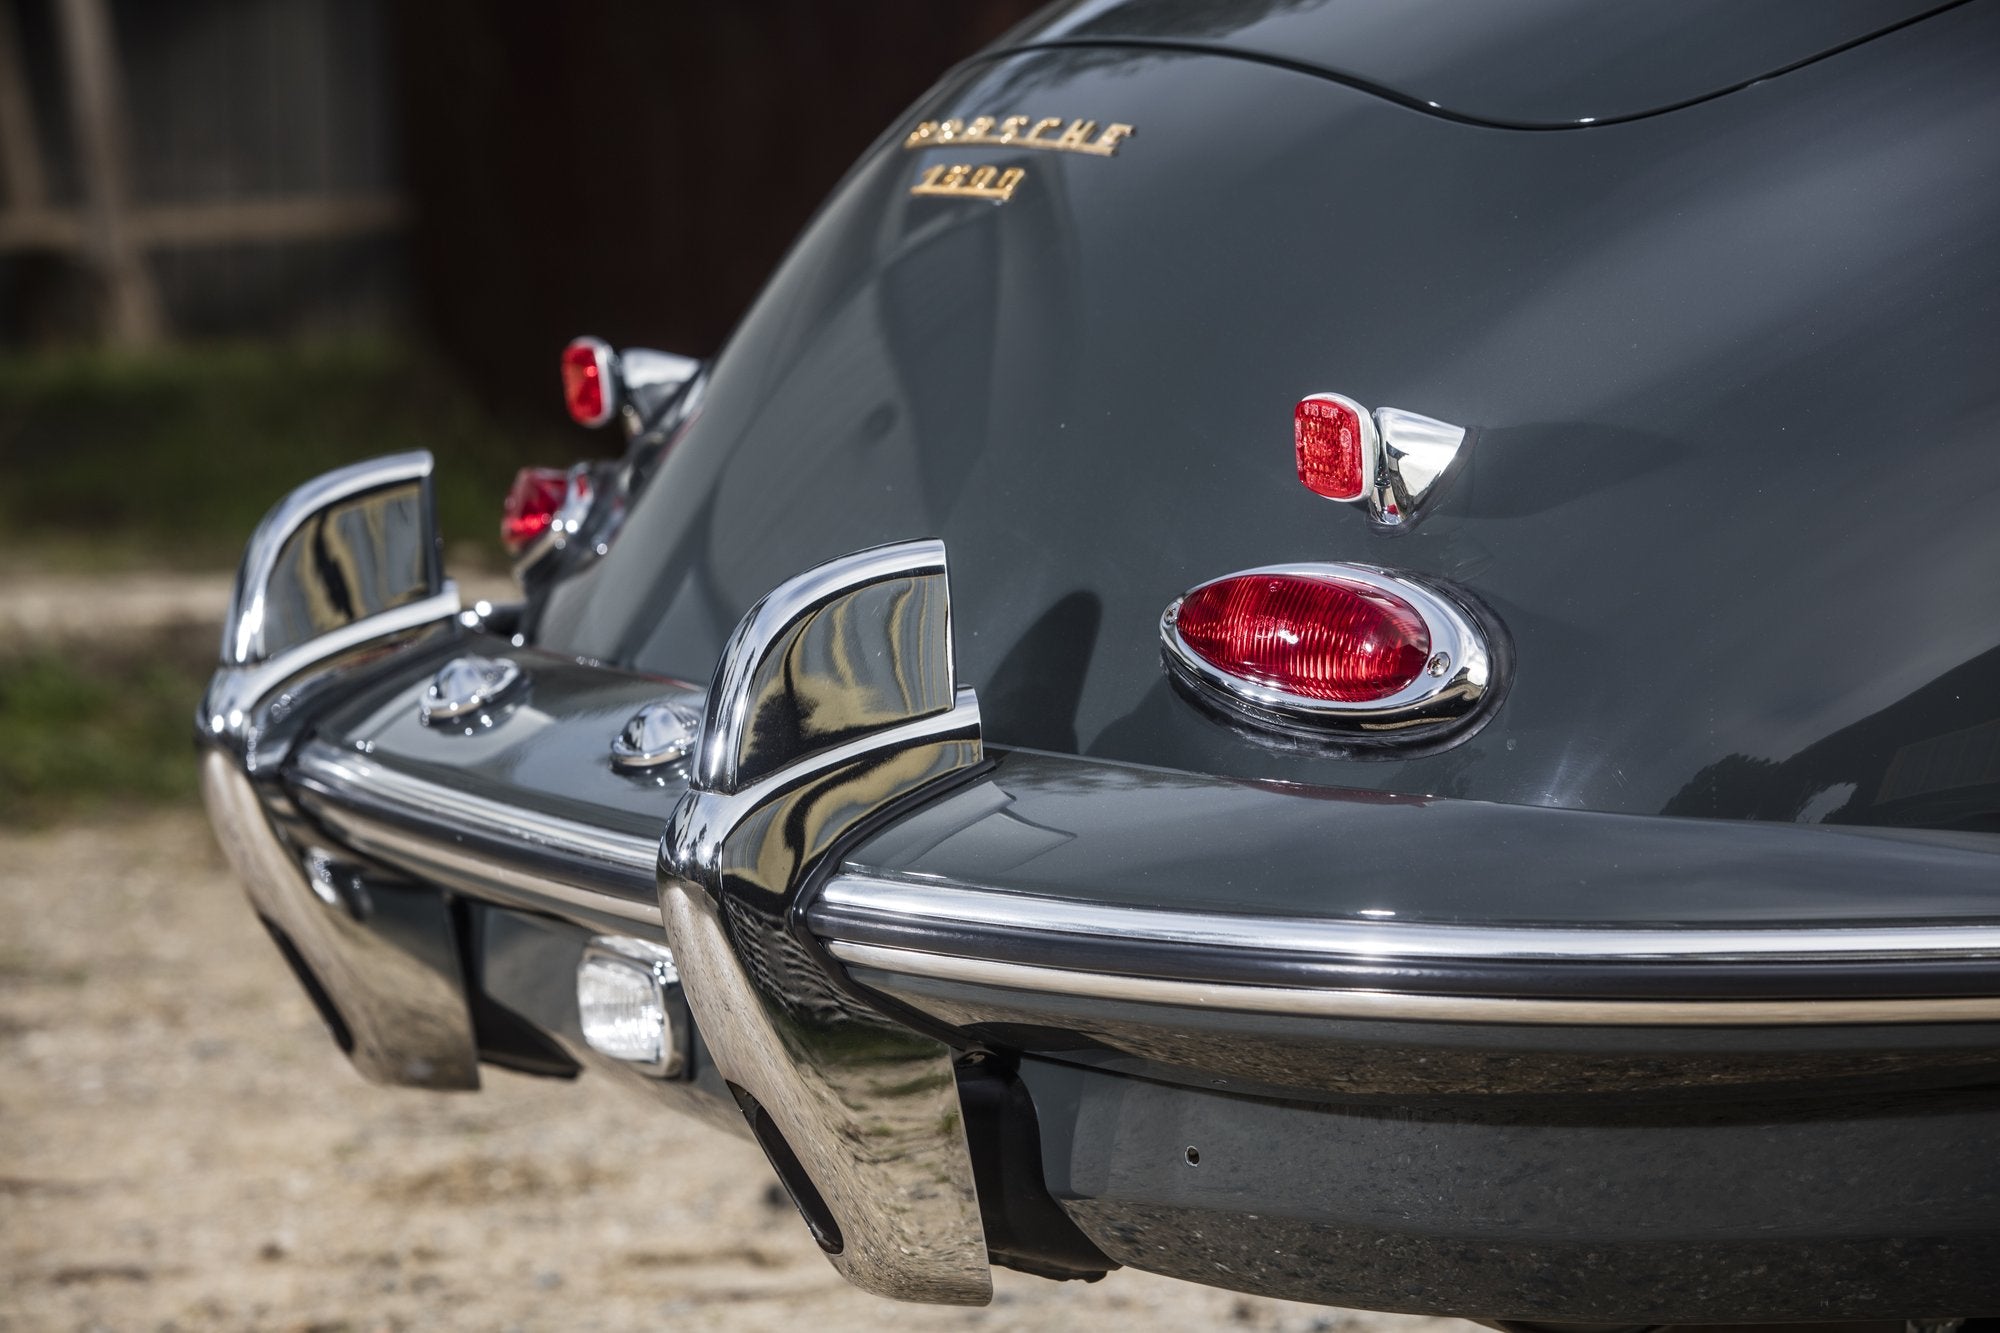 Voiture Porsche Roadster Slate Grey 1960 Cuir Gris Cabane